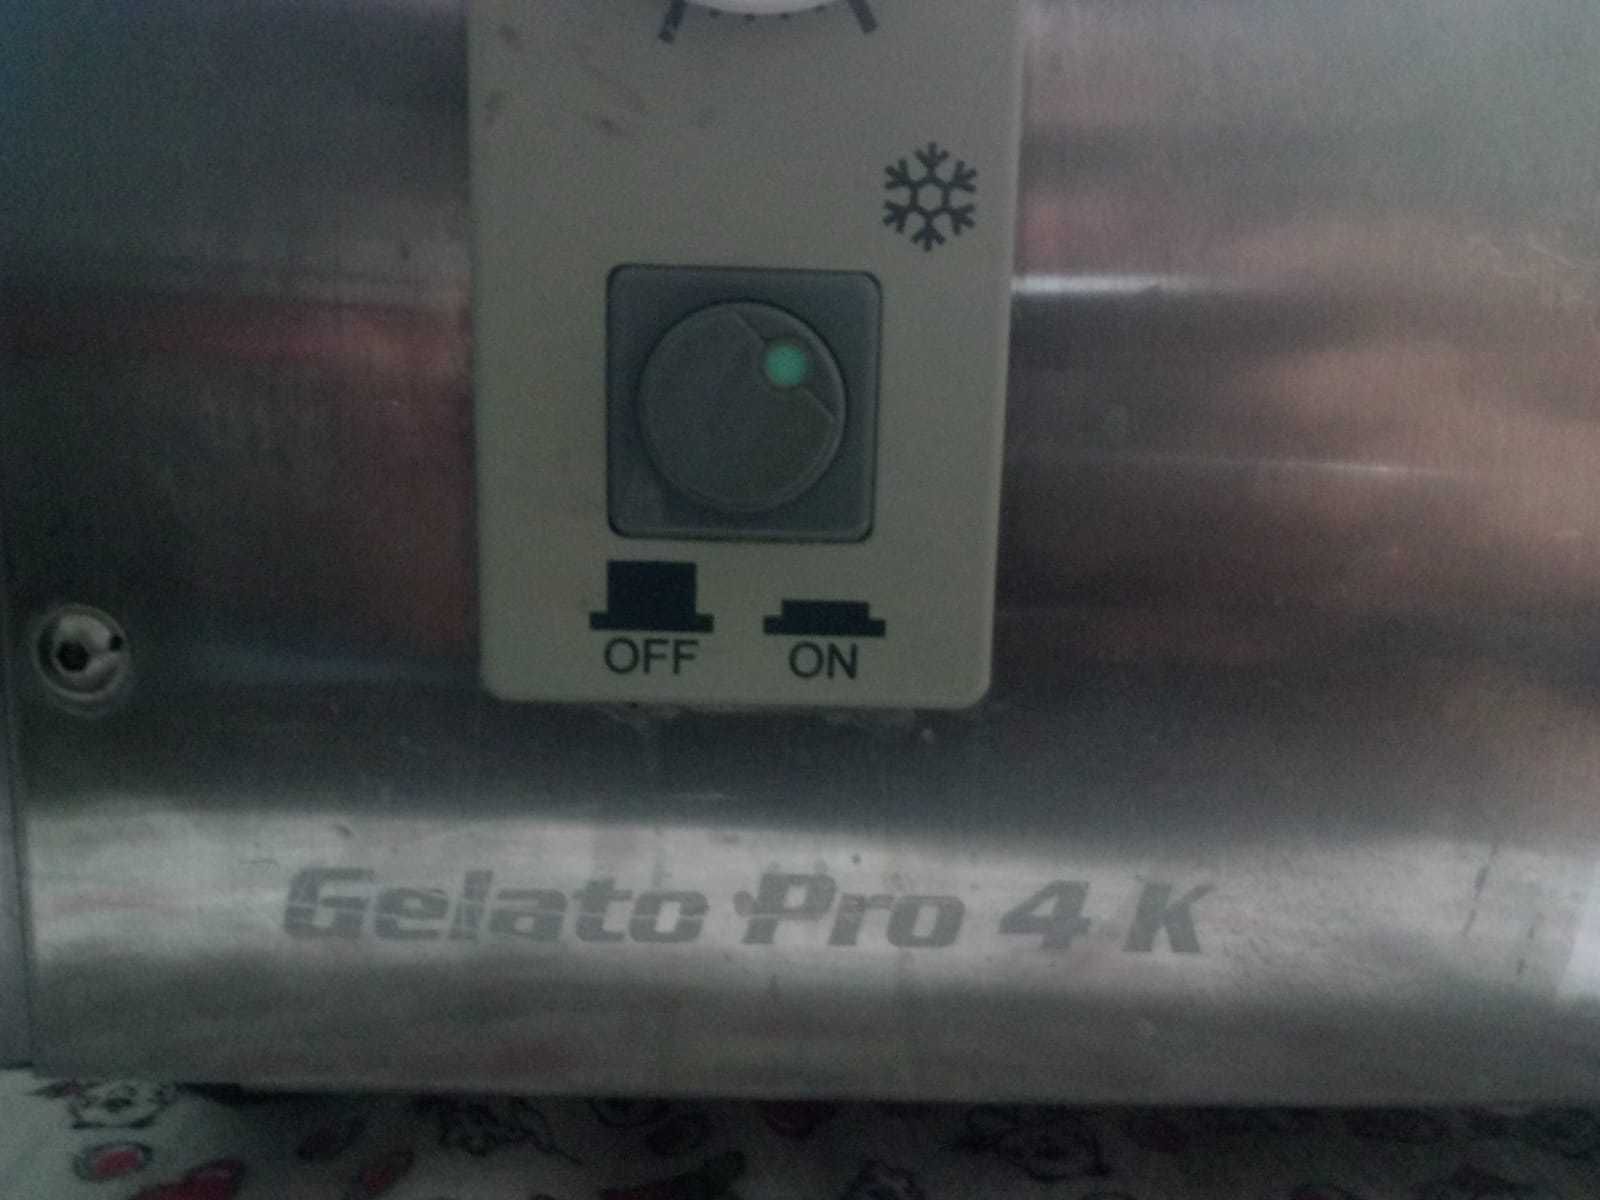 Продам професійну мороженицю, фрезер  Gelato Pro4k.